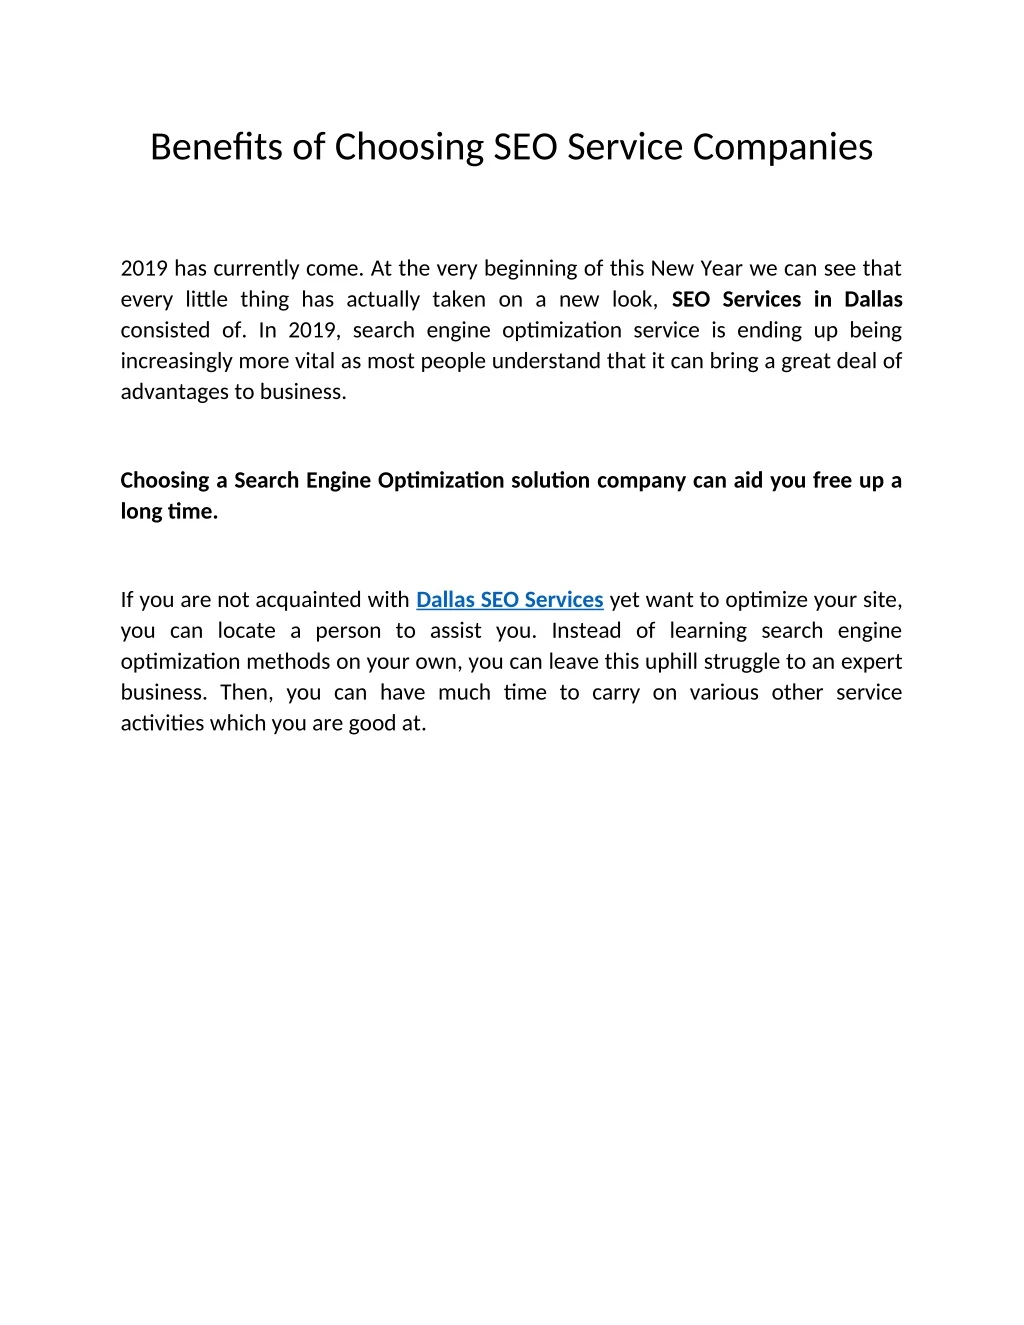 benefits of choosing seo service companies